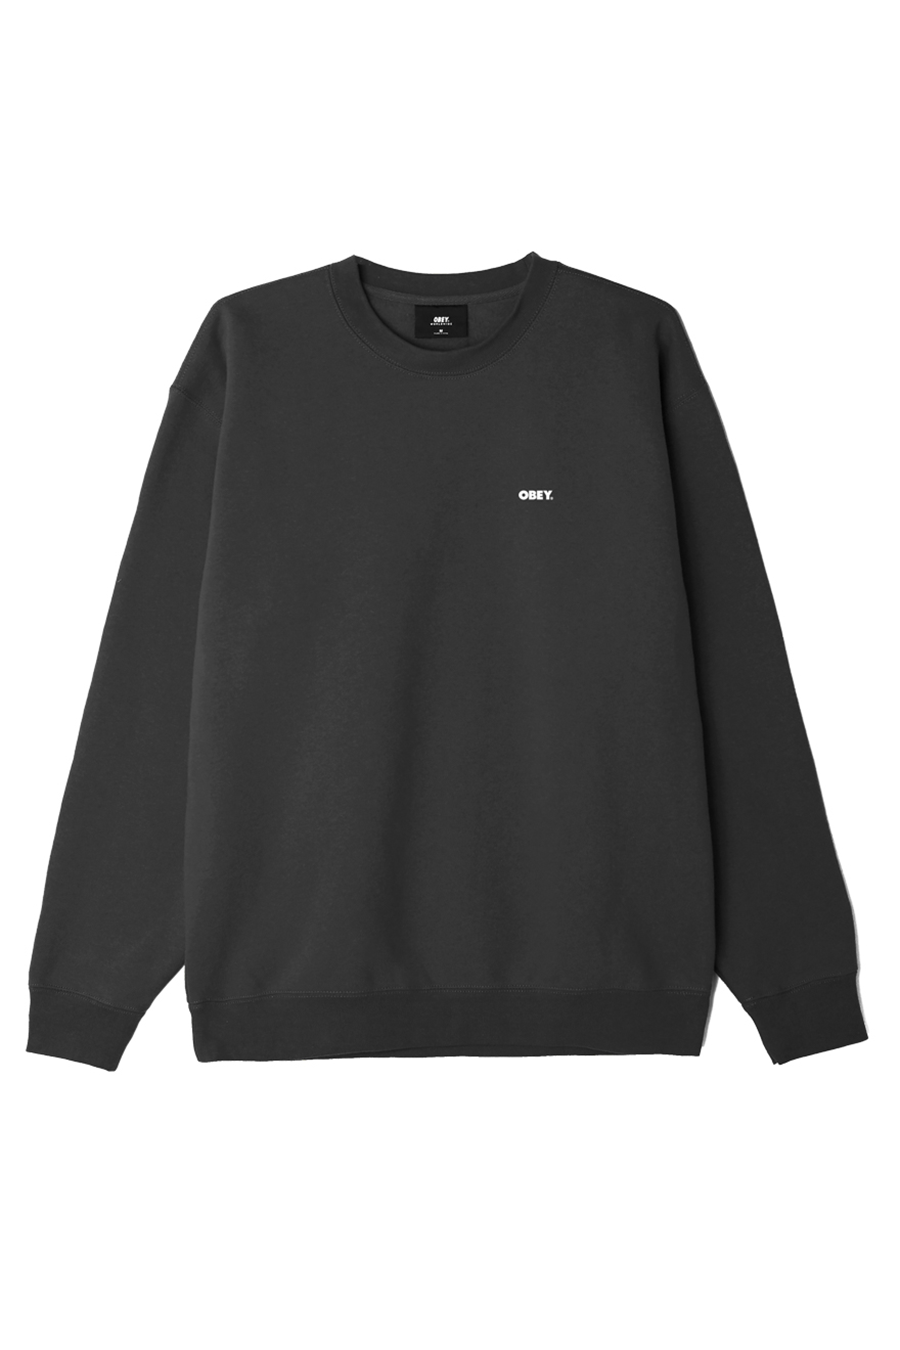 Obey Bold Sweatshirt | Black - Main Image Number 1 of 2